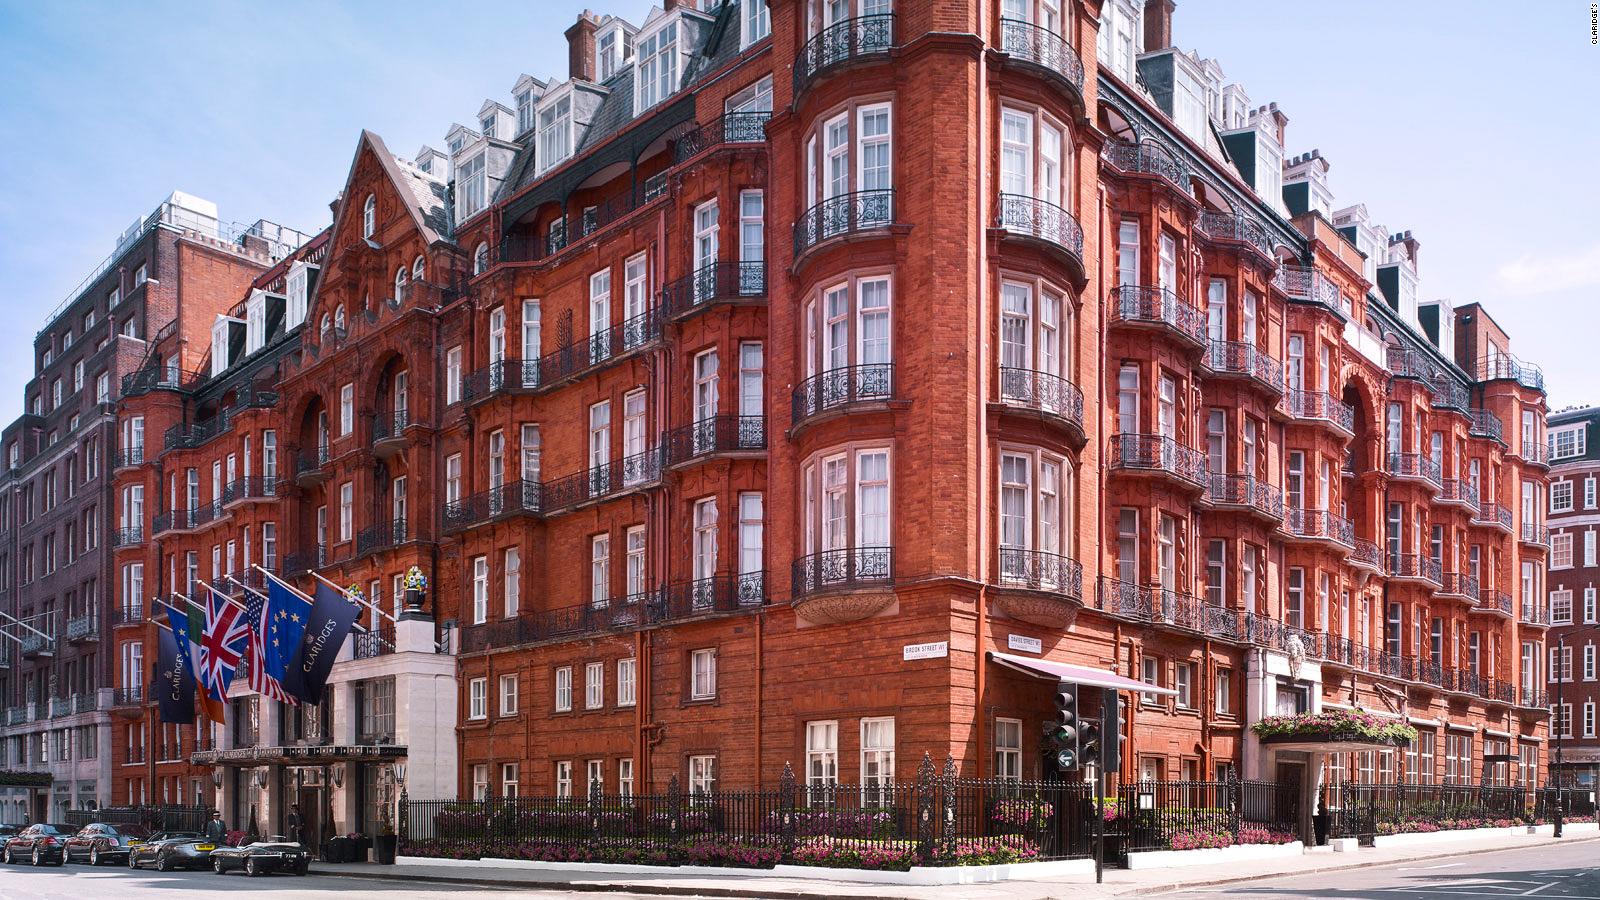 Luxury Hotel Suites & Rooms: Mayfair, London - Claridge's